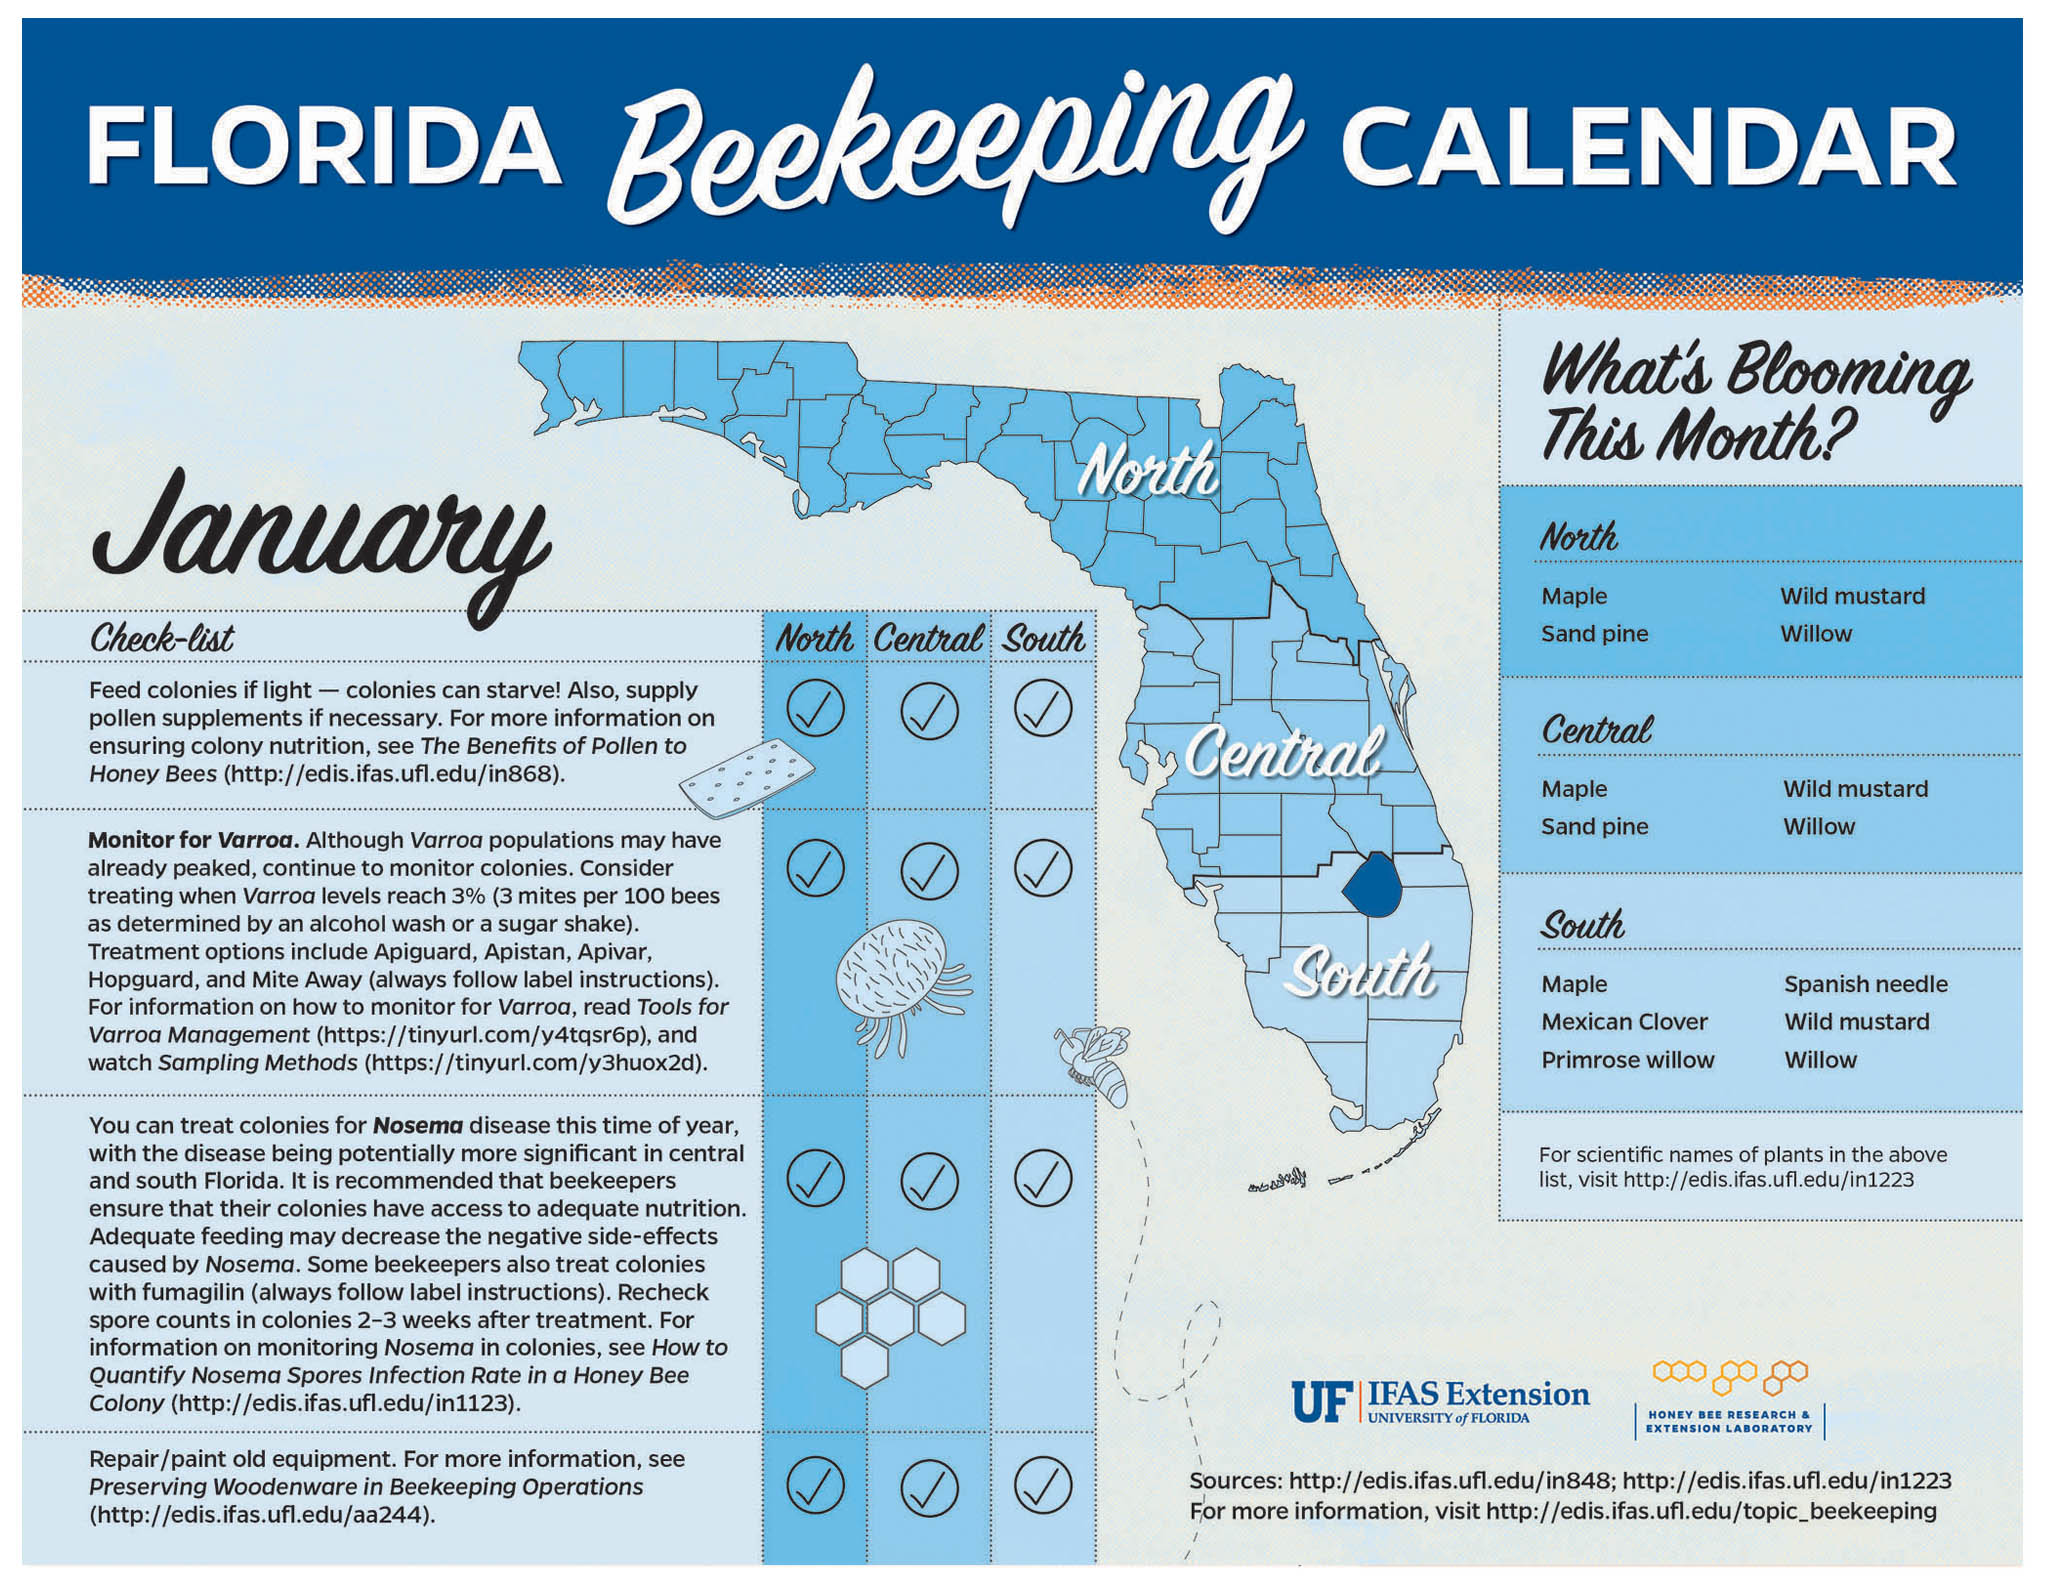 Beekeeping Calendars UF/IFAS Communications